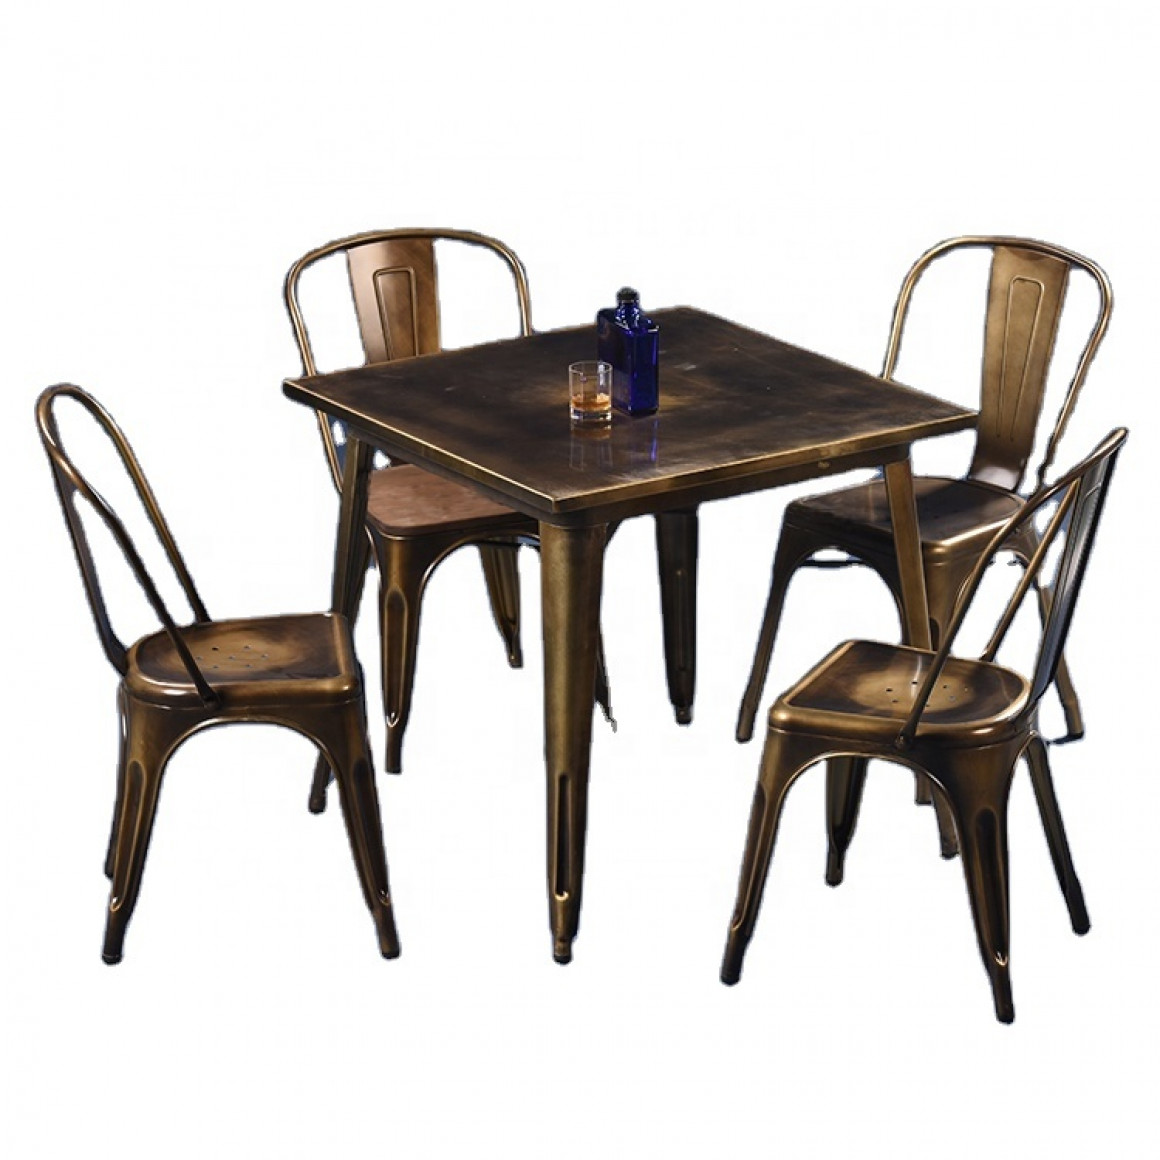 Table: steel, antique brass